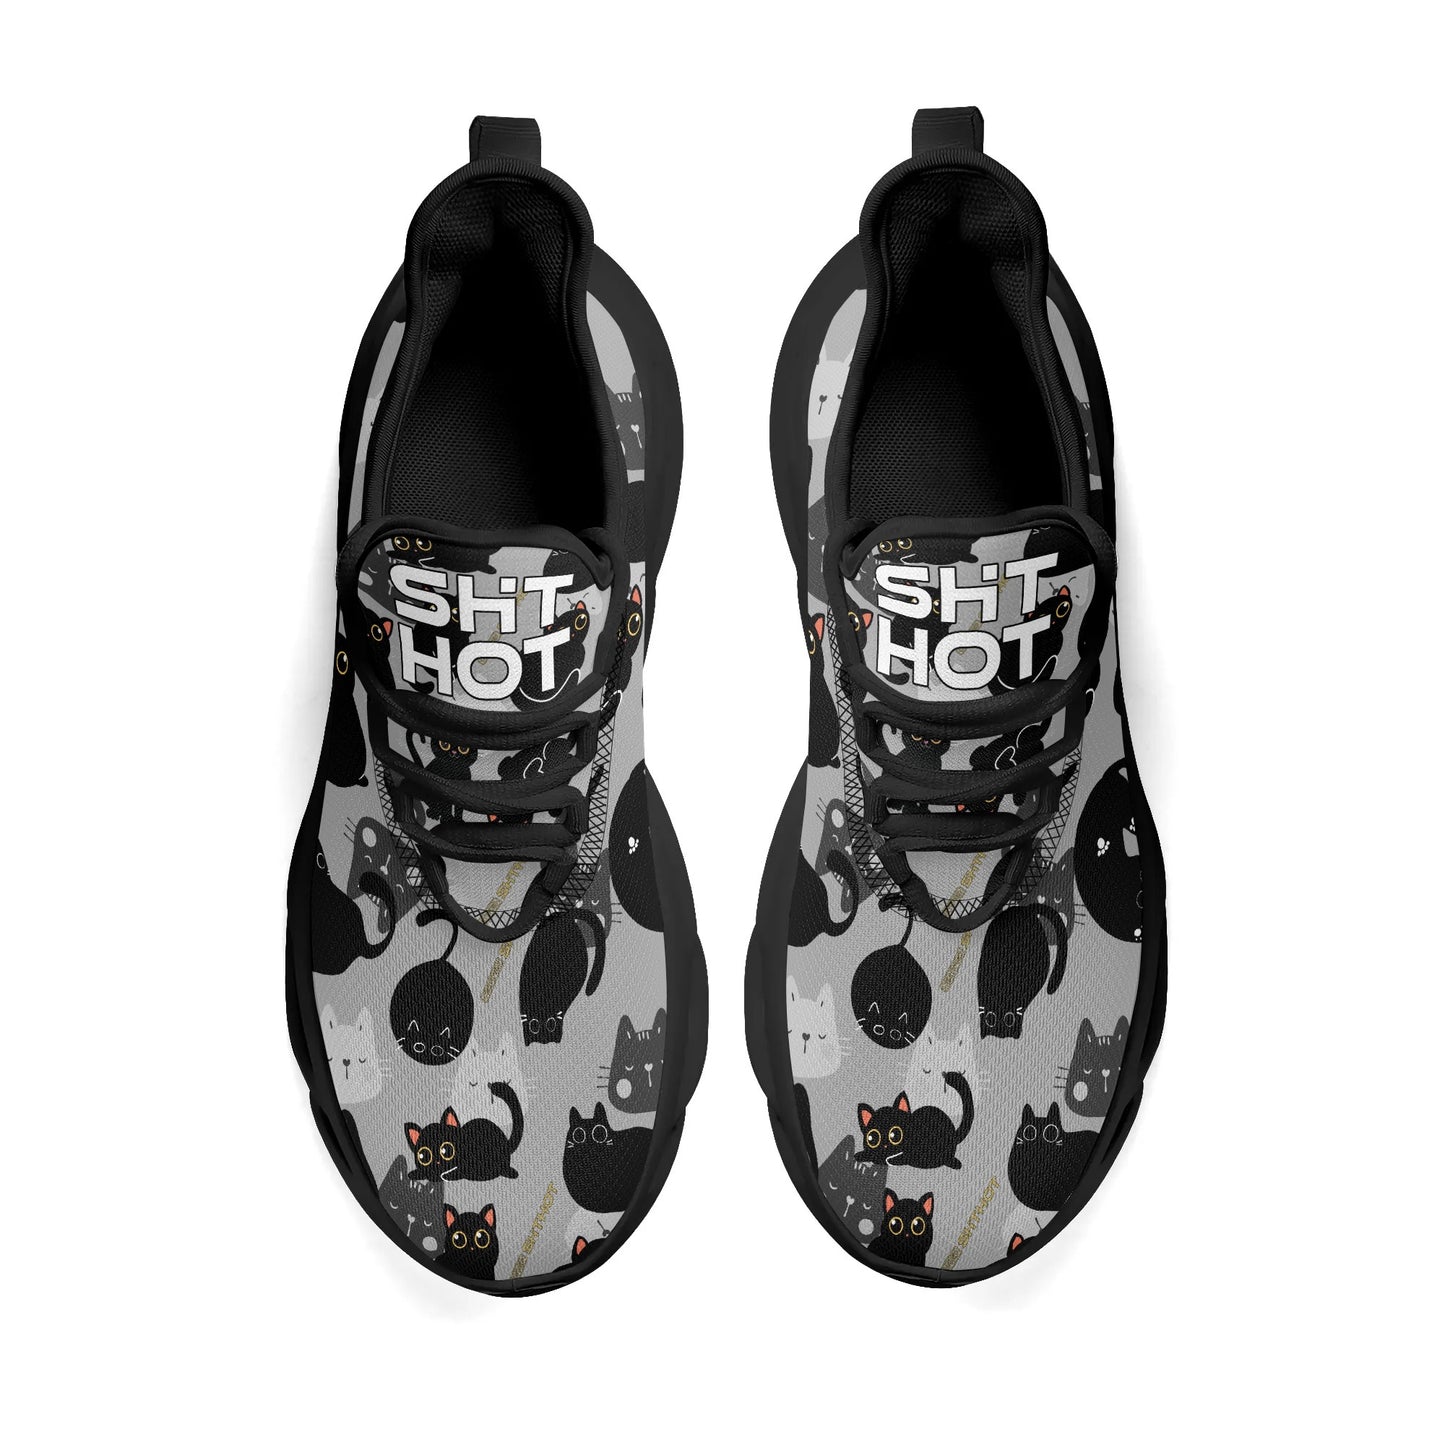 ShitHot Men's Premium M-Sole "FurryFeet" Sneakers - Black Cat #theshithotcompany